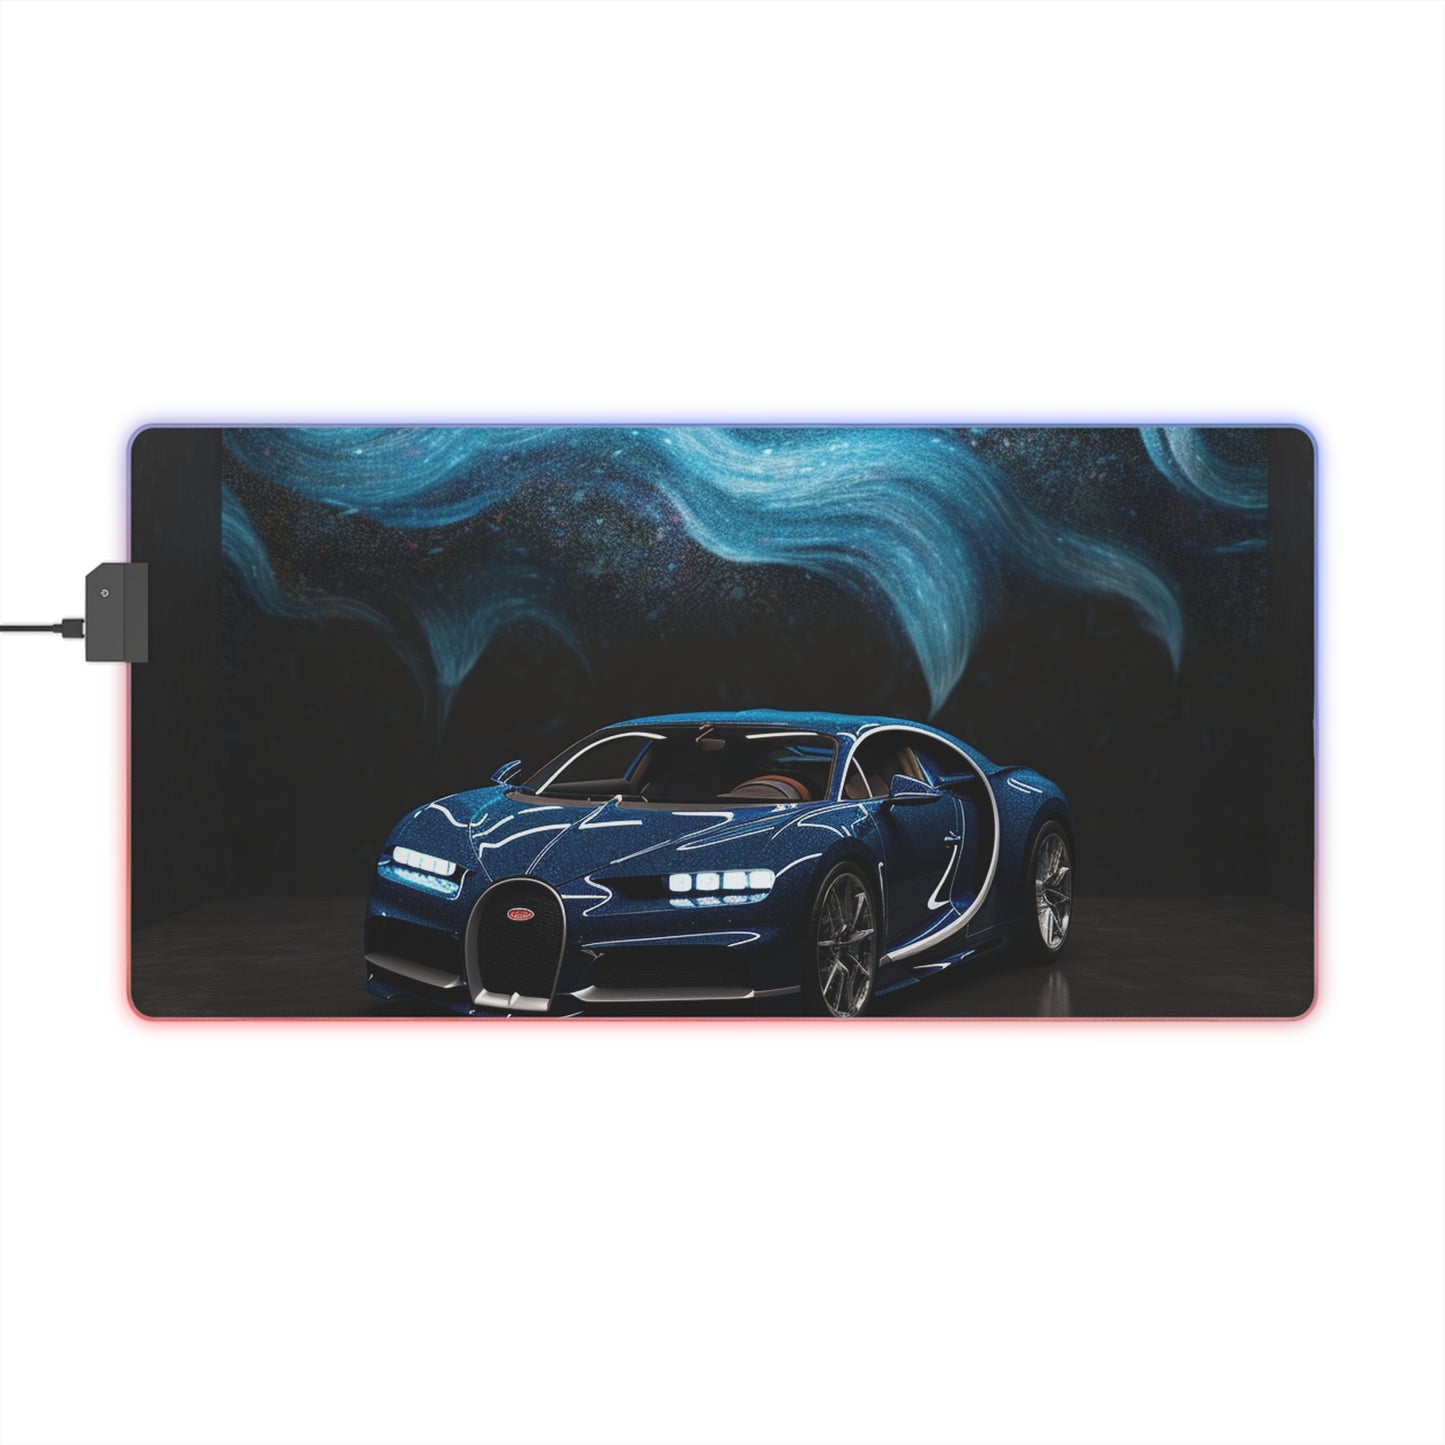 LED Gaming Mouse Pad Hyper Bugatti 3